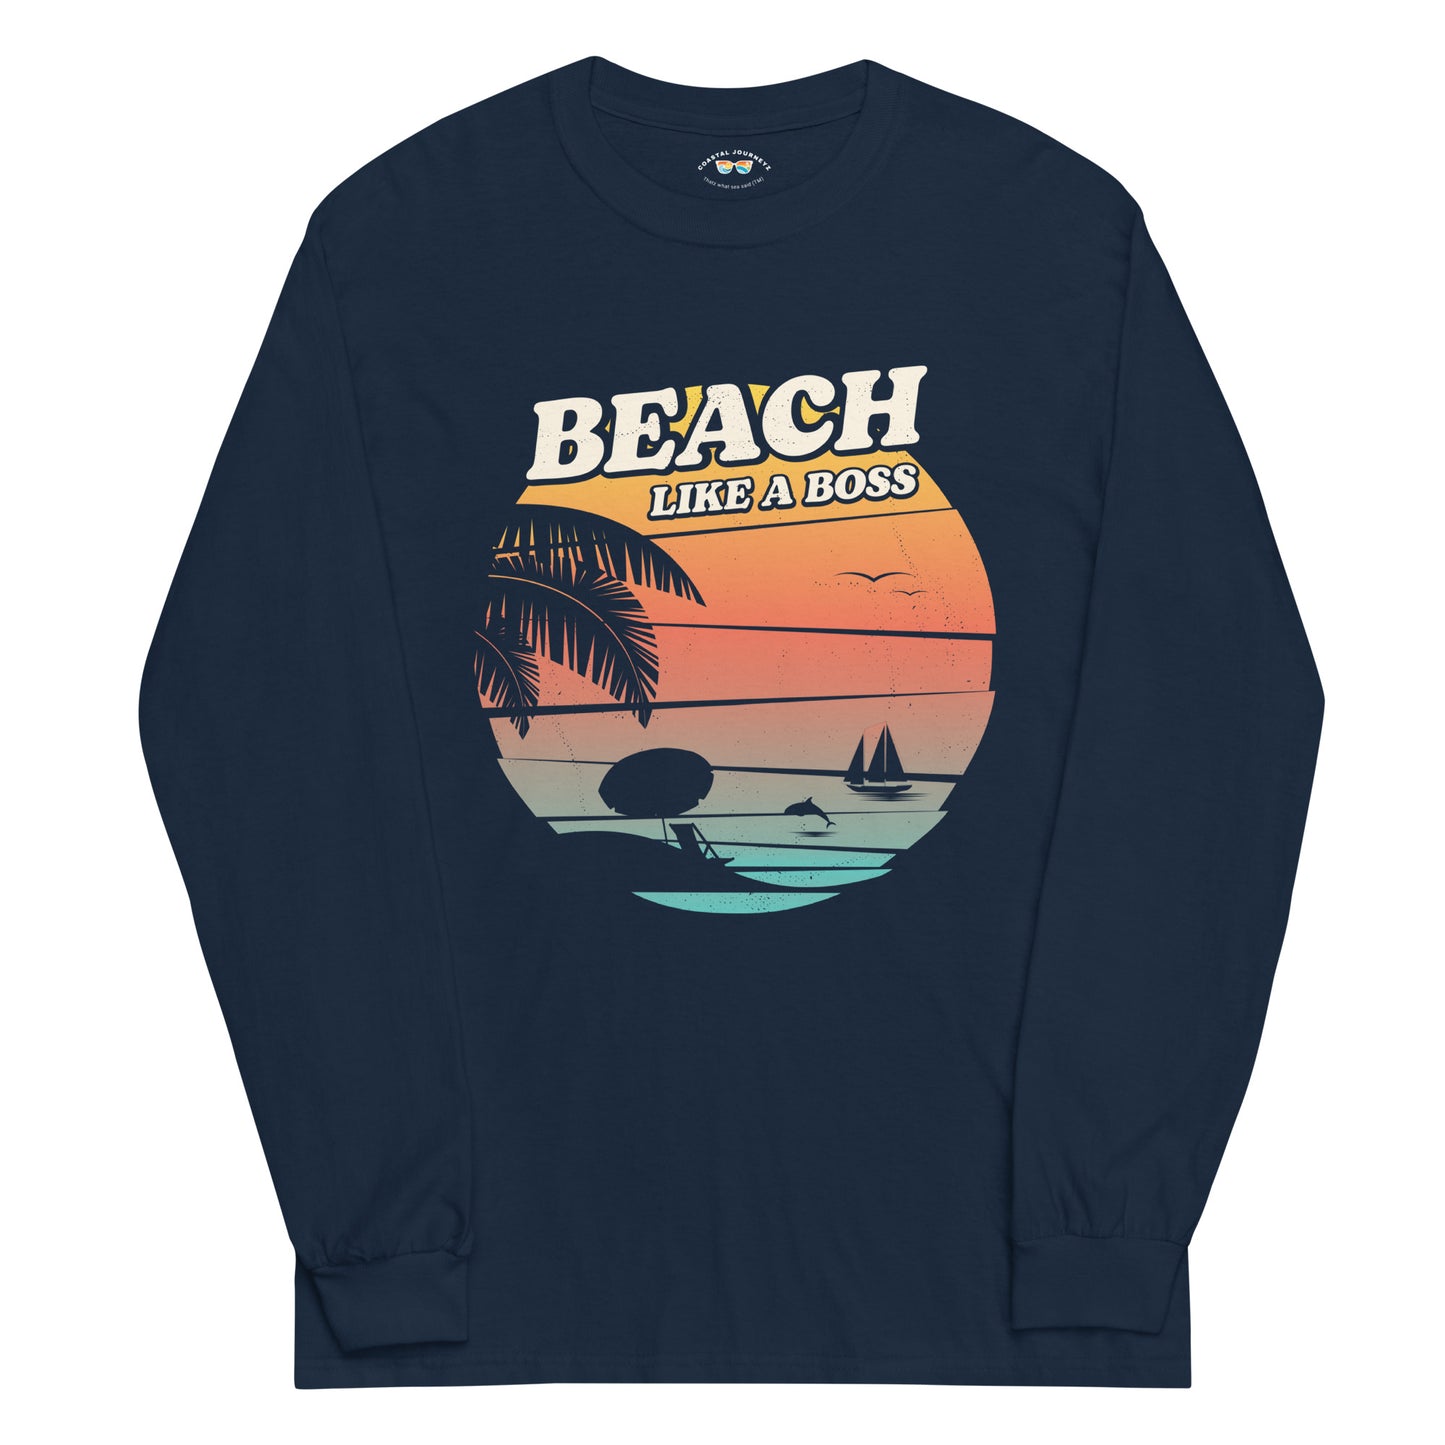 Beach Like A Boss with this Coastal Journeyz Adult Long Sleeve T-Shirt